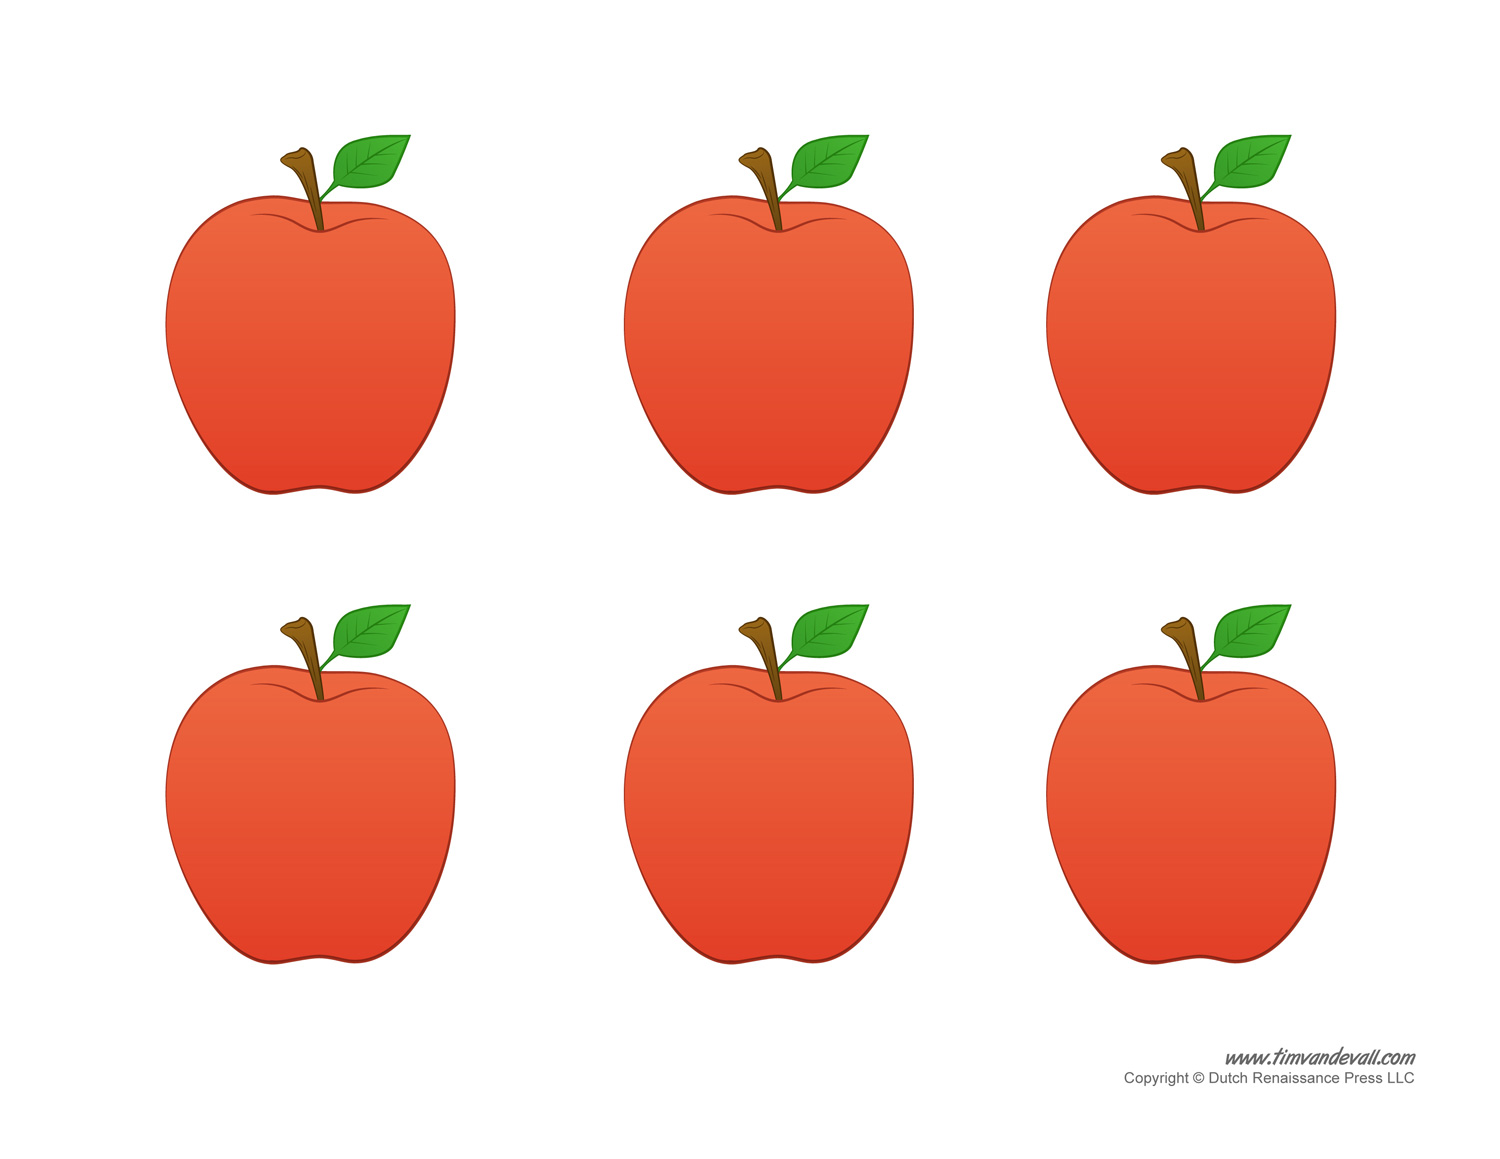 Printable Apple Templates To Make Apple Crafts For Preschool